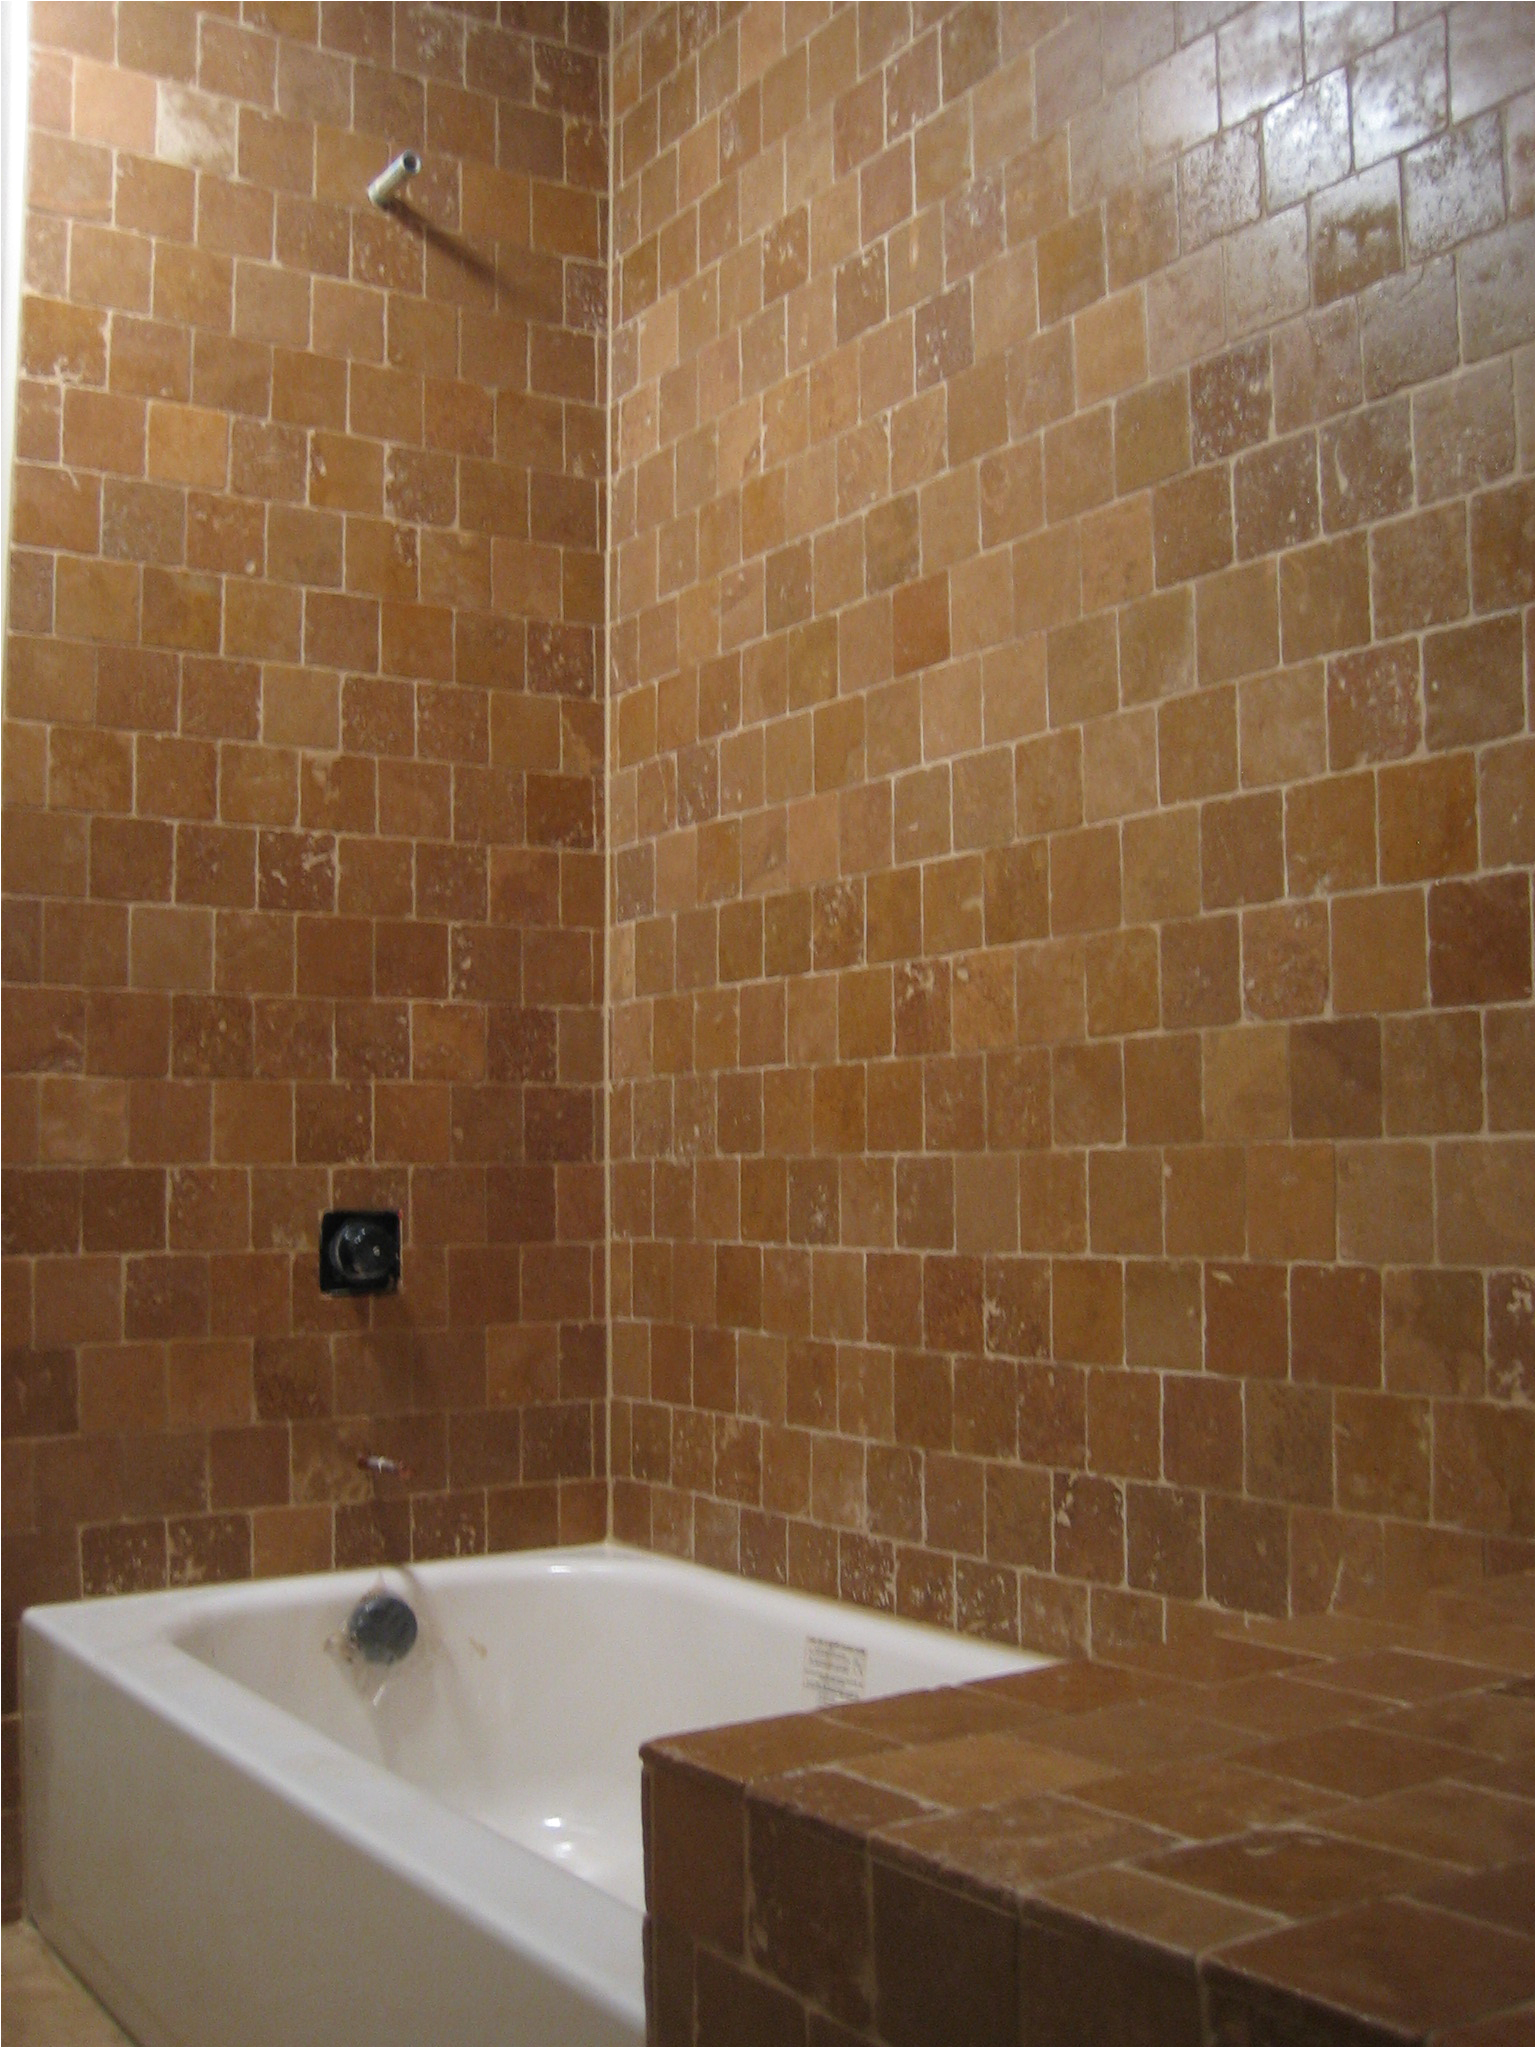 Bathtub Surround Lowes Bathroom Installation Simple and Secure with Bathtub